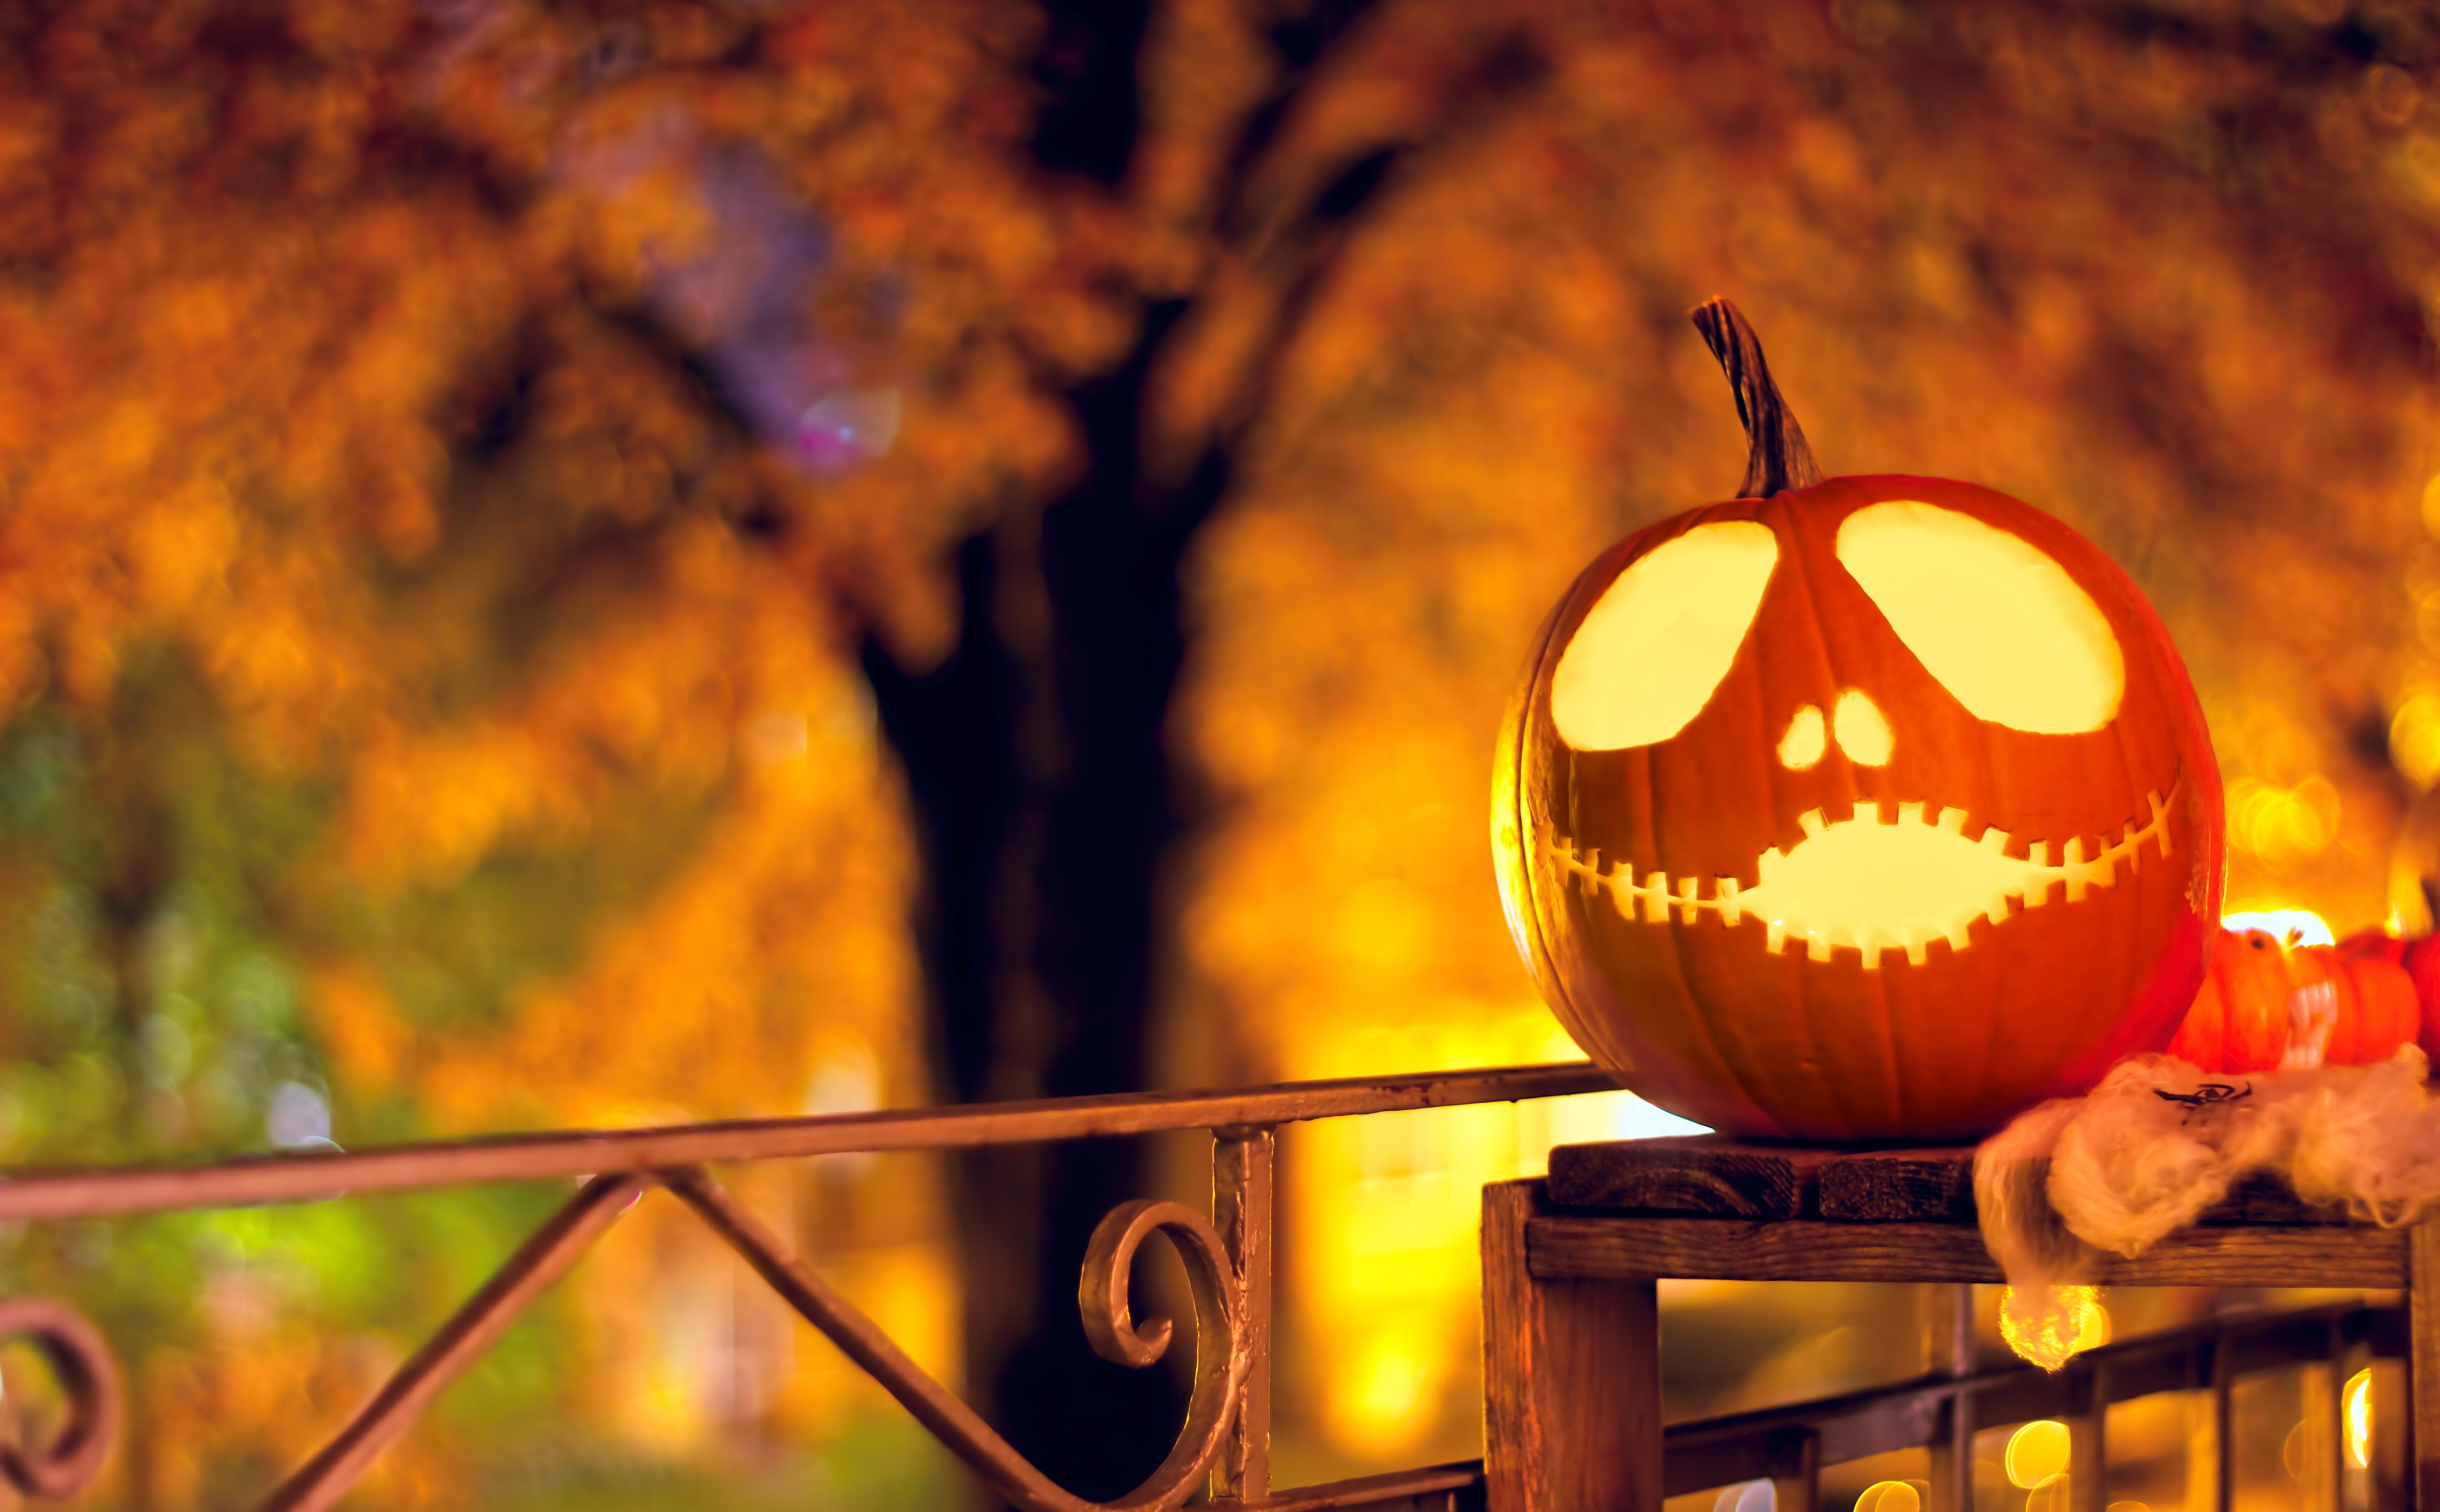 Im Jack, jack-o-lantern, Holidays, Halloween, Pumpkin, jack-o'-lantern